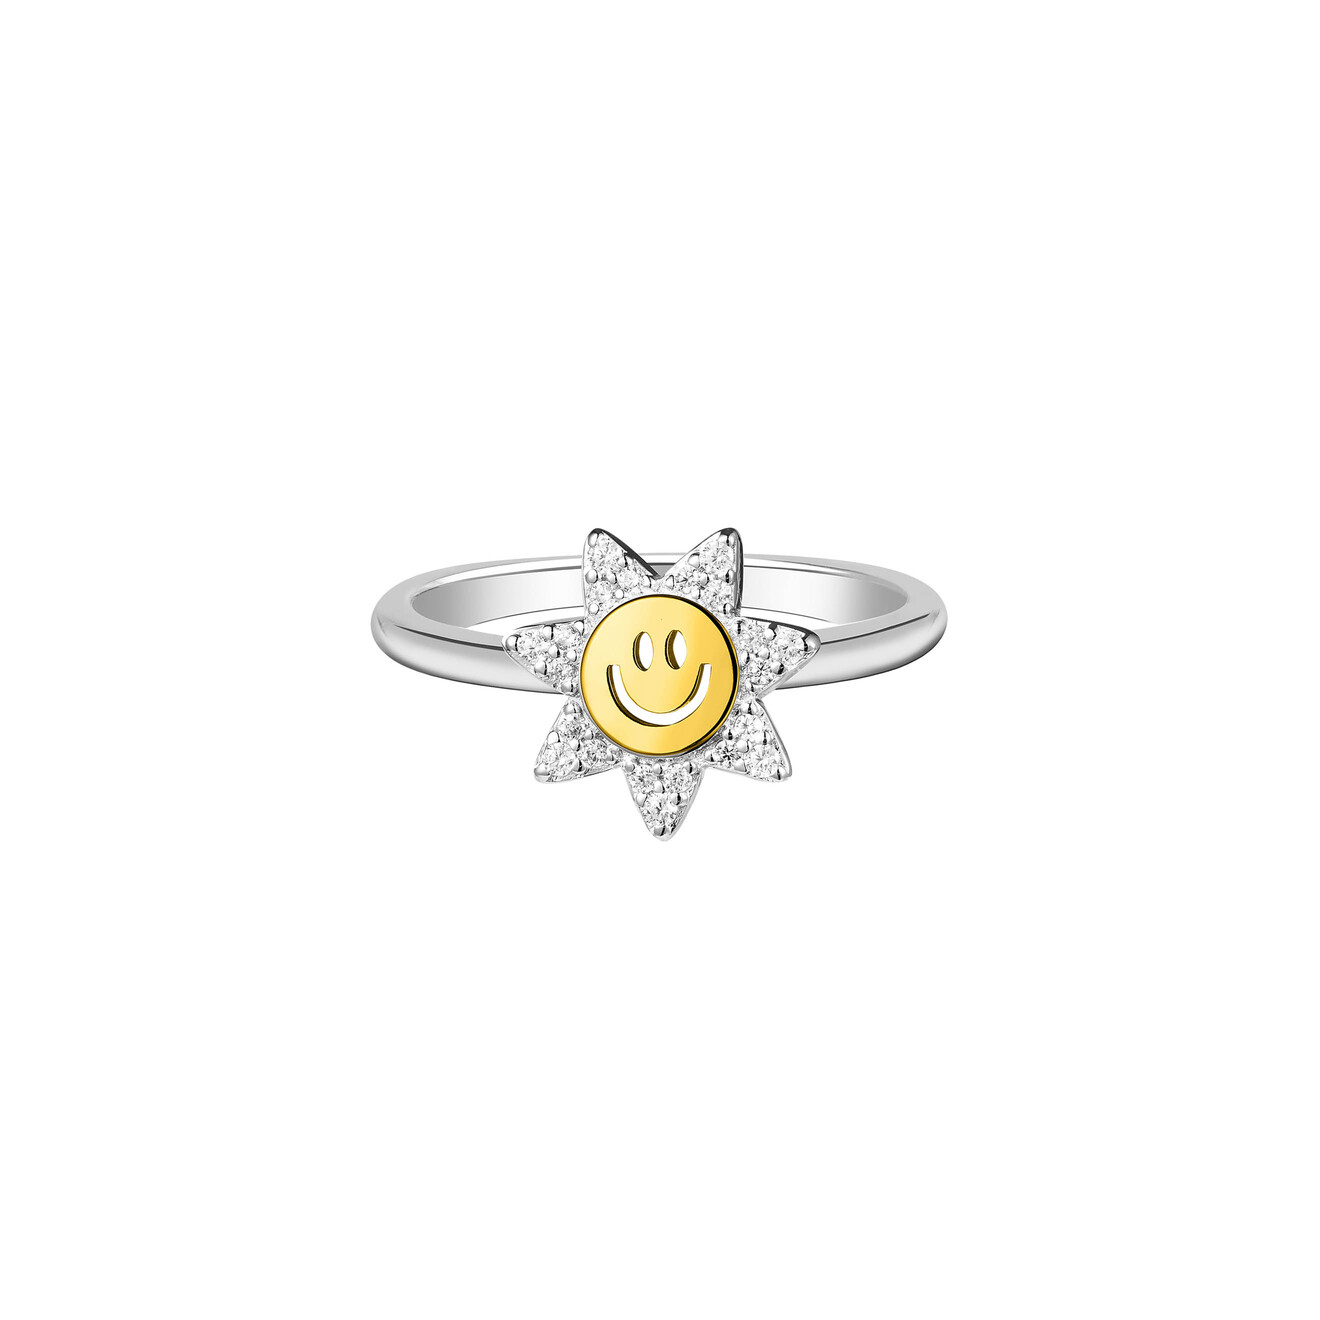 WANNA?BE! Кольцо Смайл-цветок с камнями биколорное lisa smith биколорное кольцо с кисточкой из цепочек